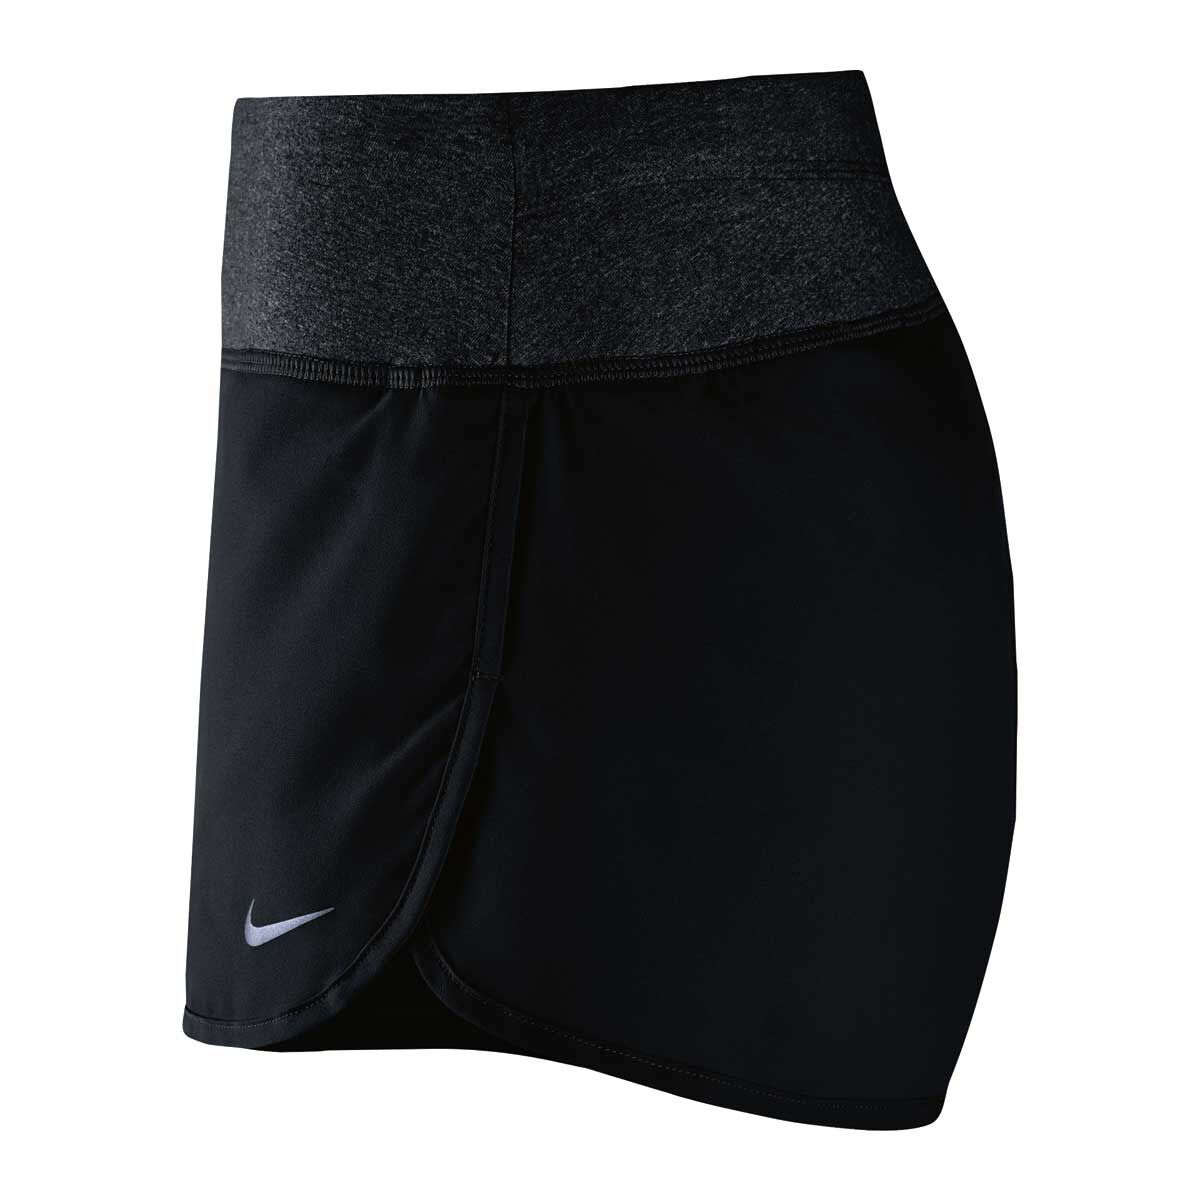 nike rival shorts womens